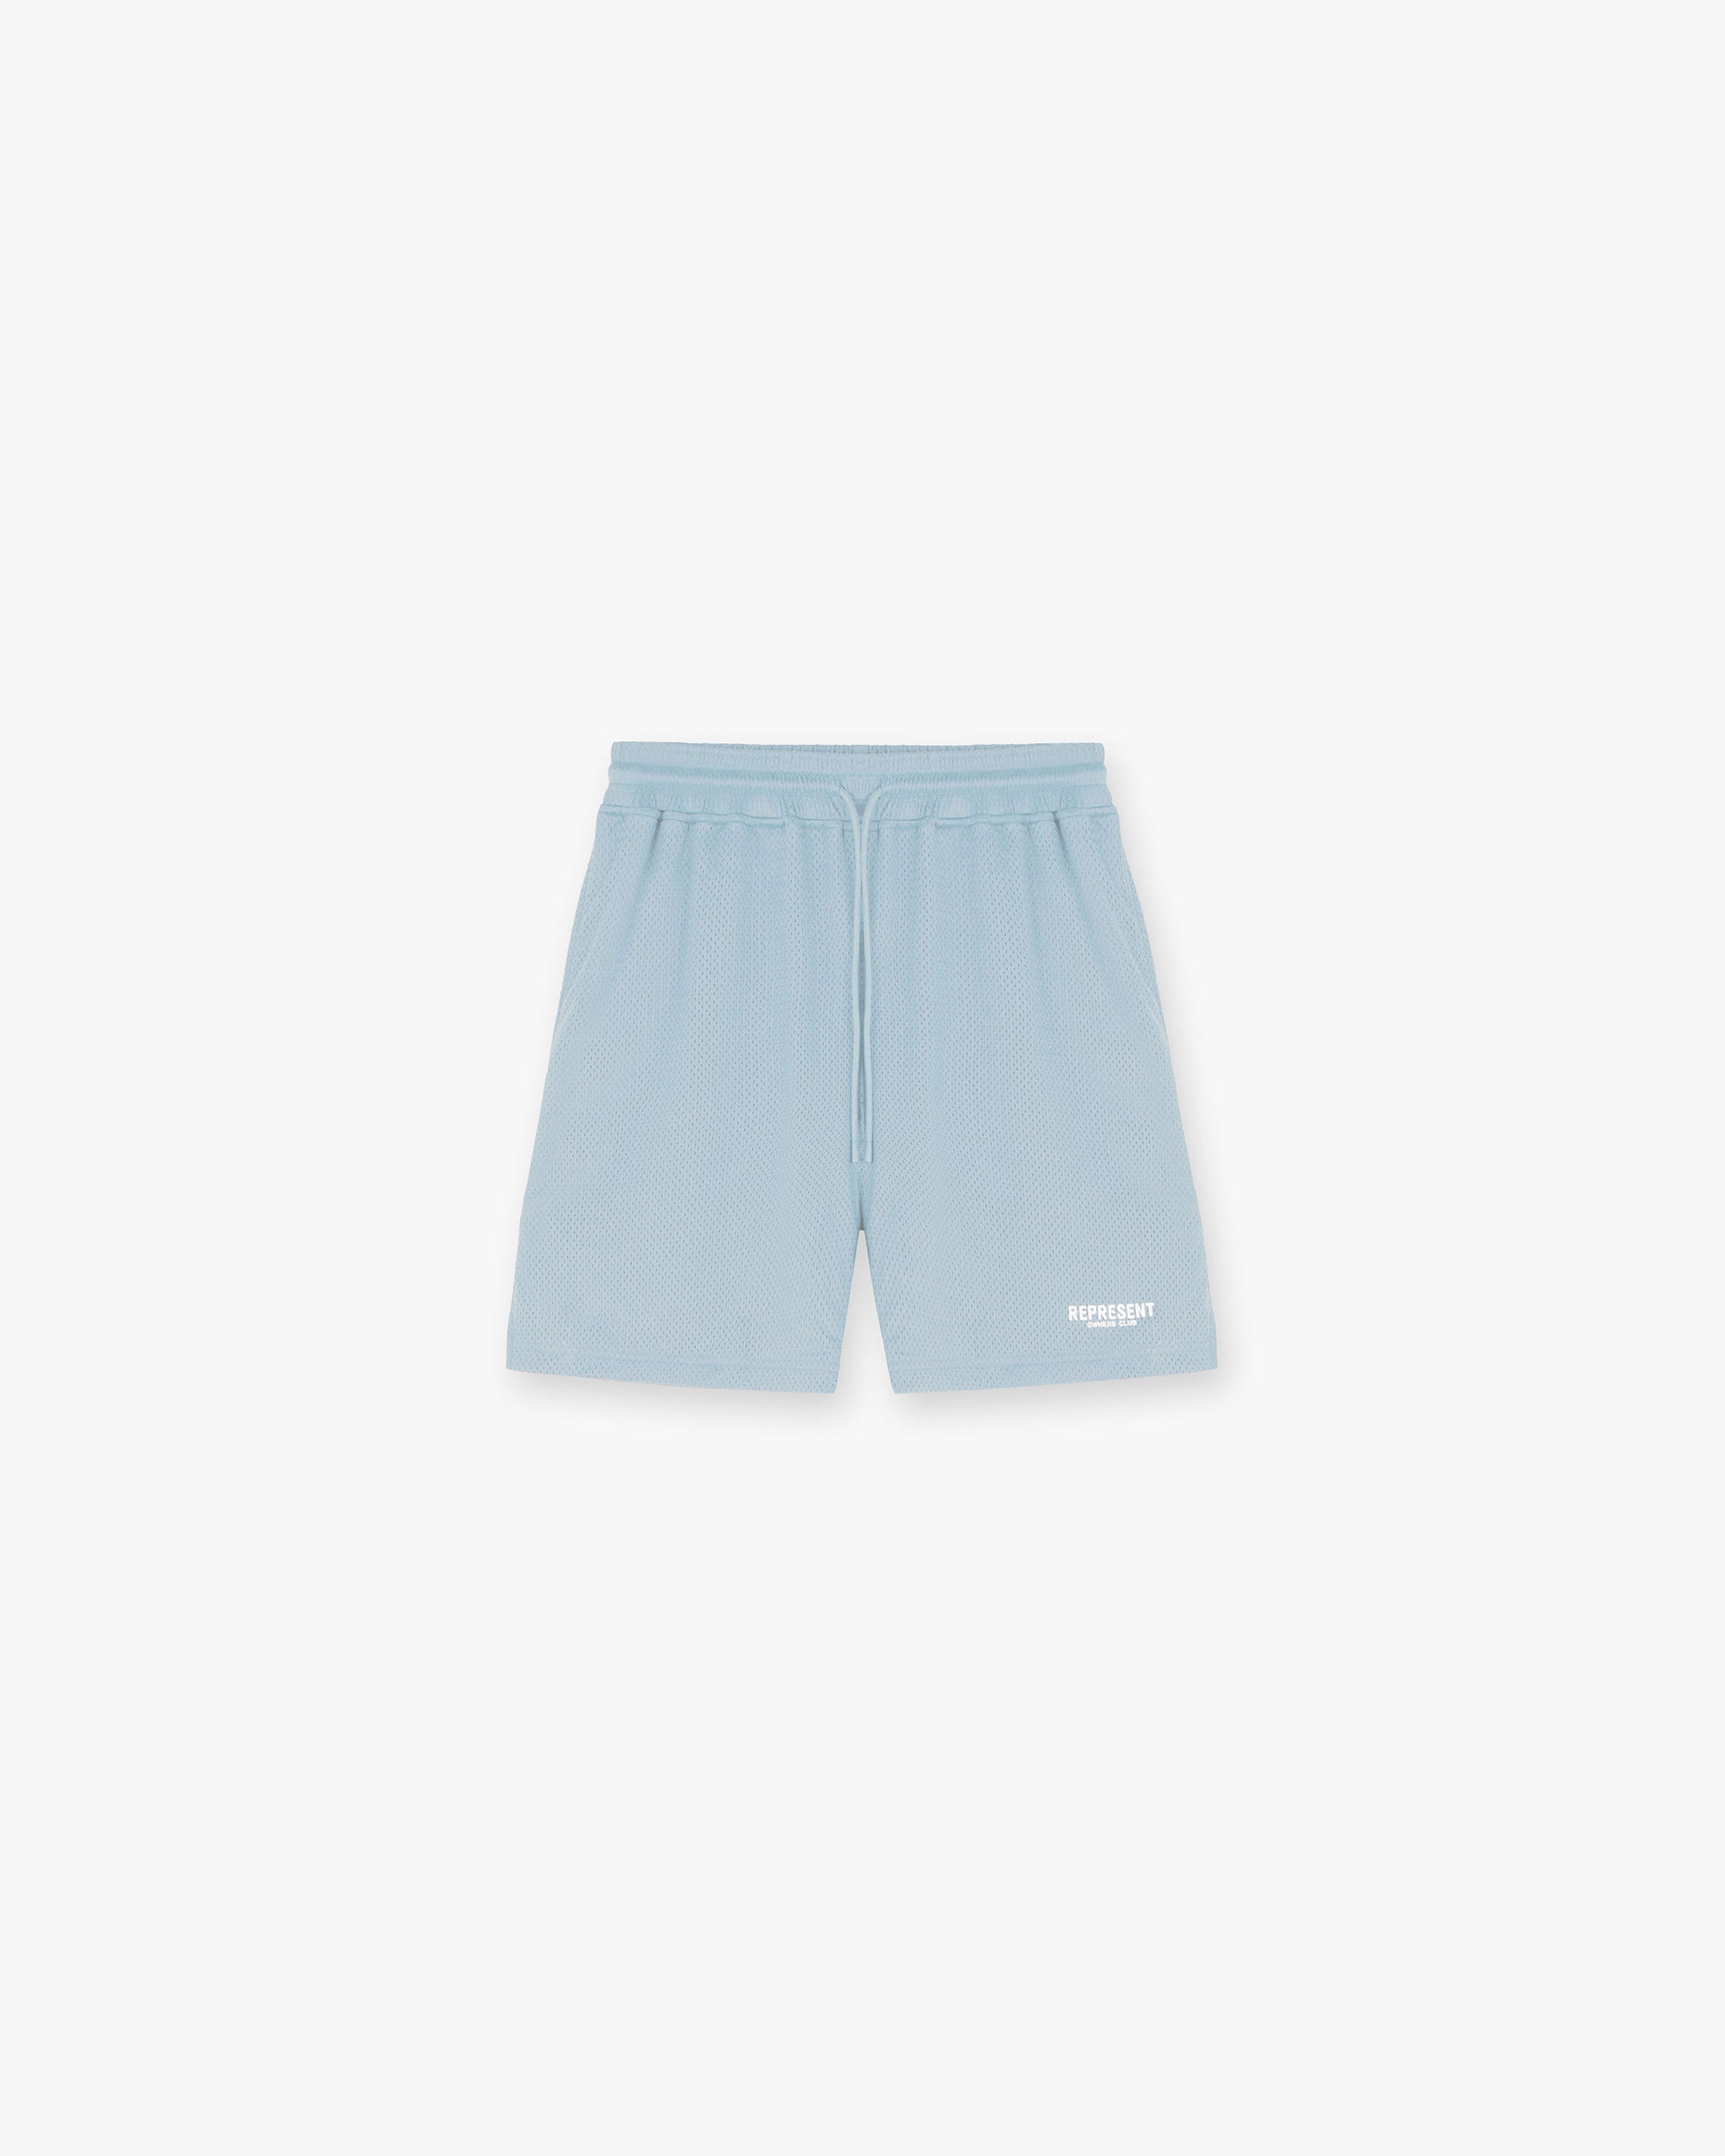 Represent Owners Club Mesh Shorts - Powder Blue